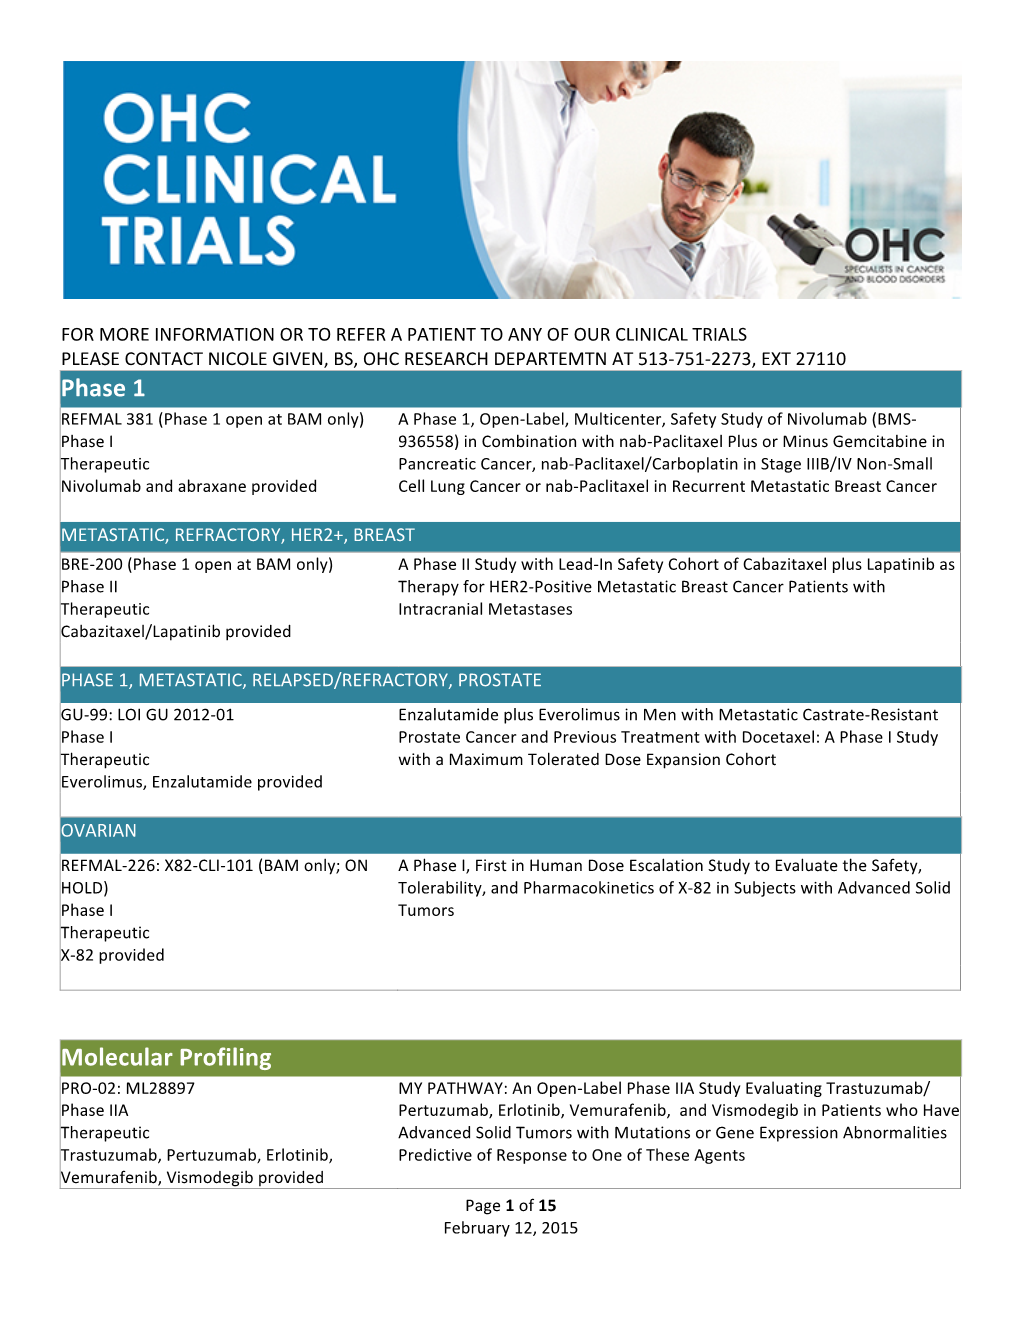 OHC Clinical Trials List V3 06112014